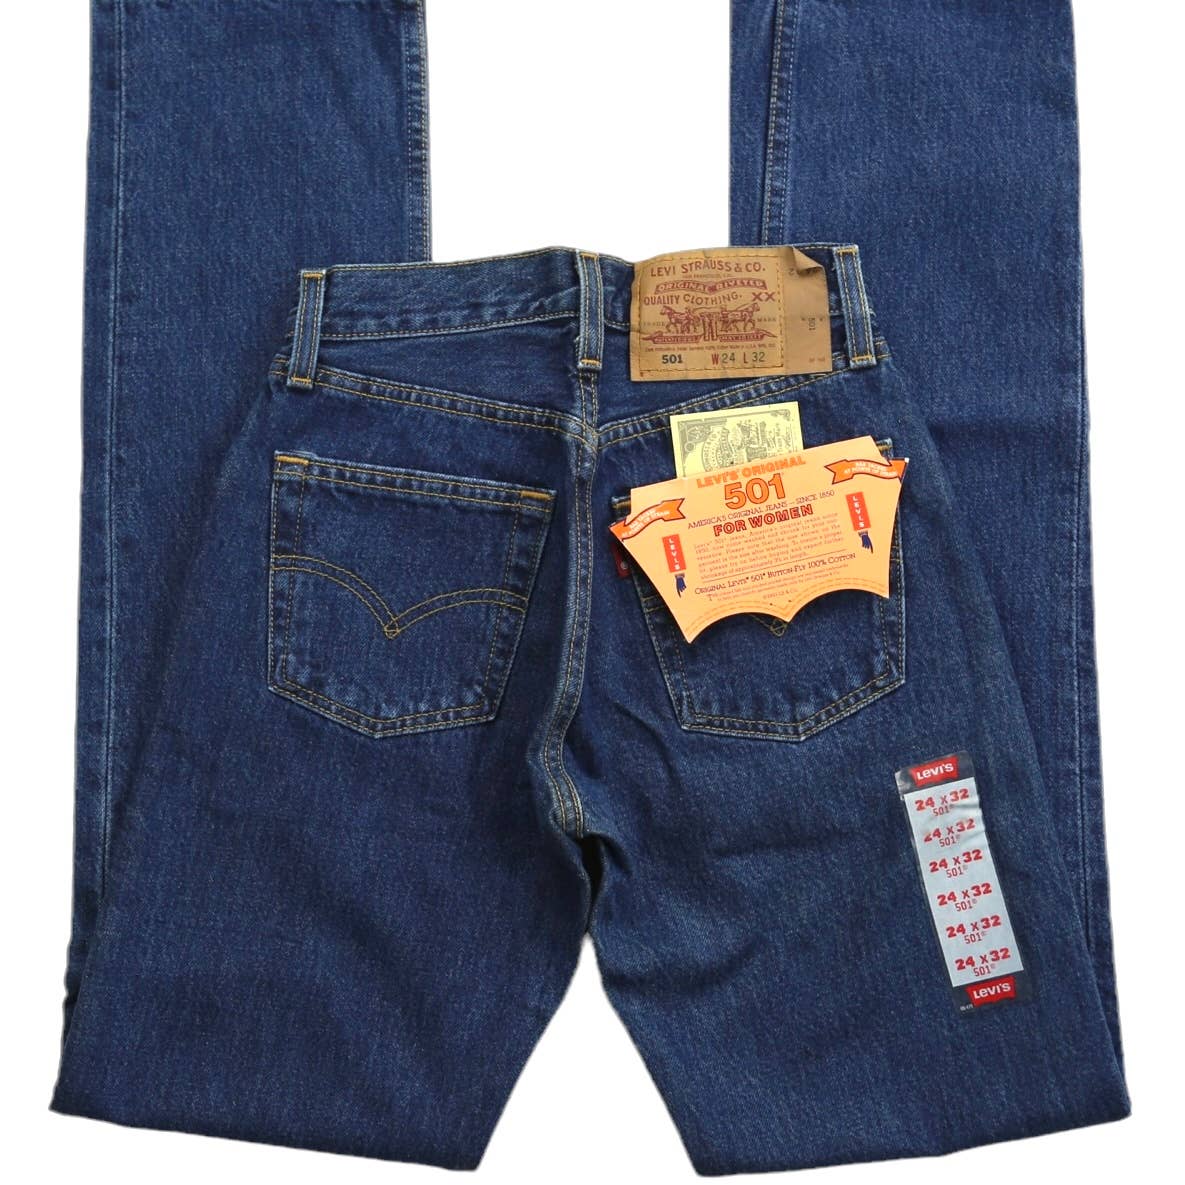 Vintage Levi’s 501 Deadstock Dark Wash Button Fly Jeans.